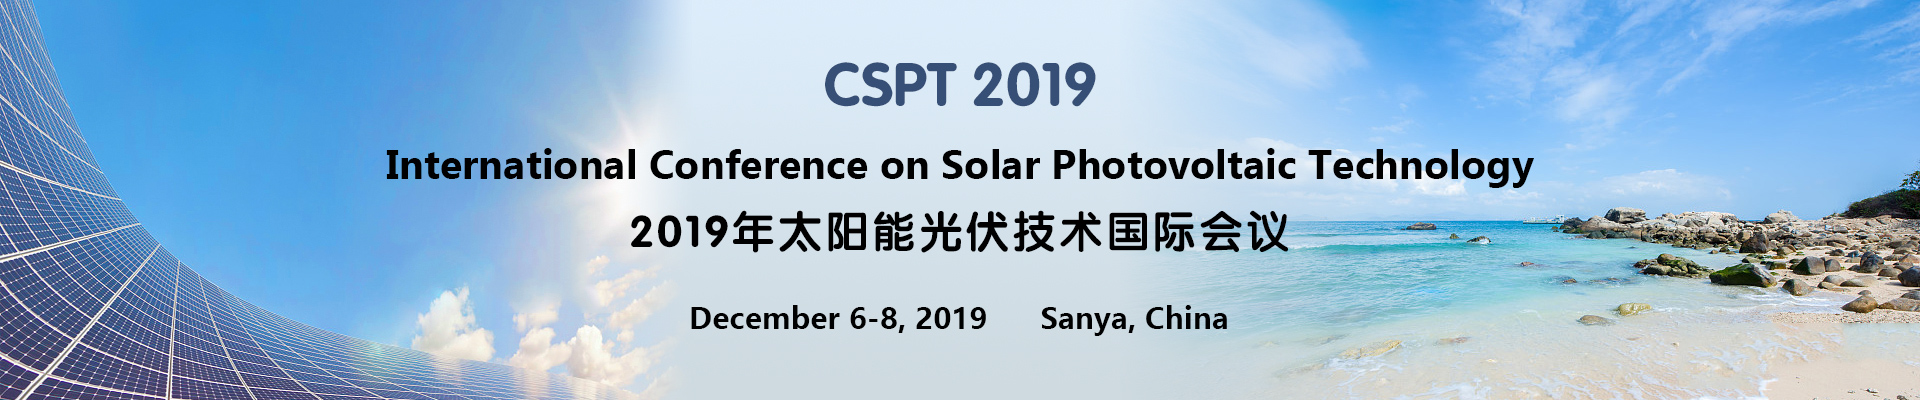 Int'l Conference on Solar Photovoltaic Technology (CSPT 2019), Sanya, Hainan, China